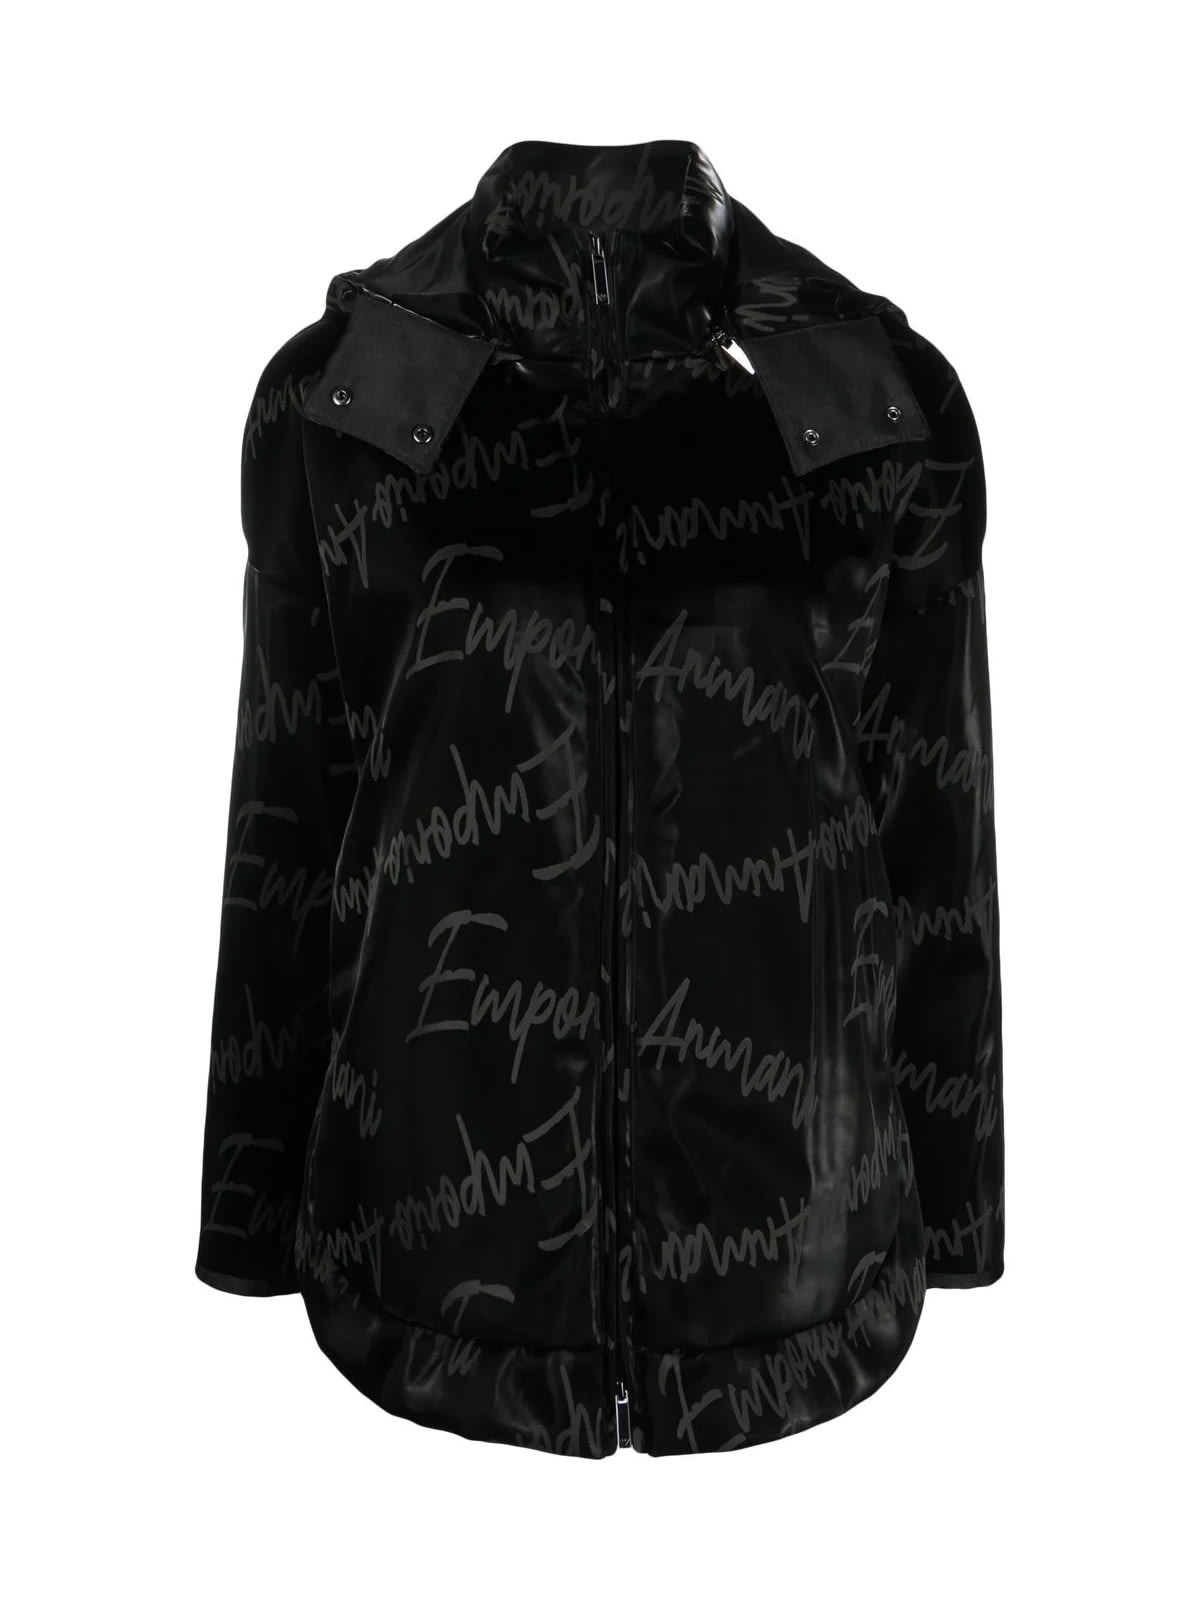 Emporio Armani Hooded Sporty Jacket